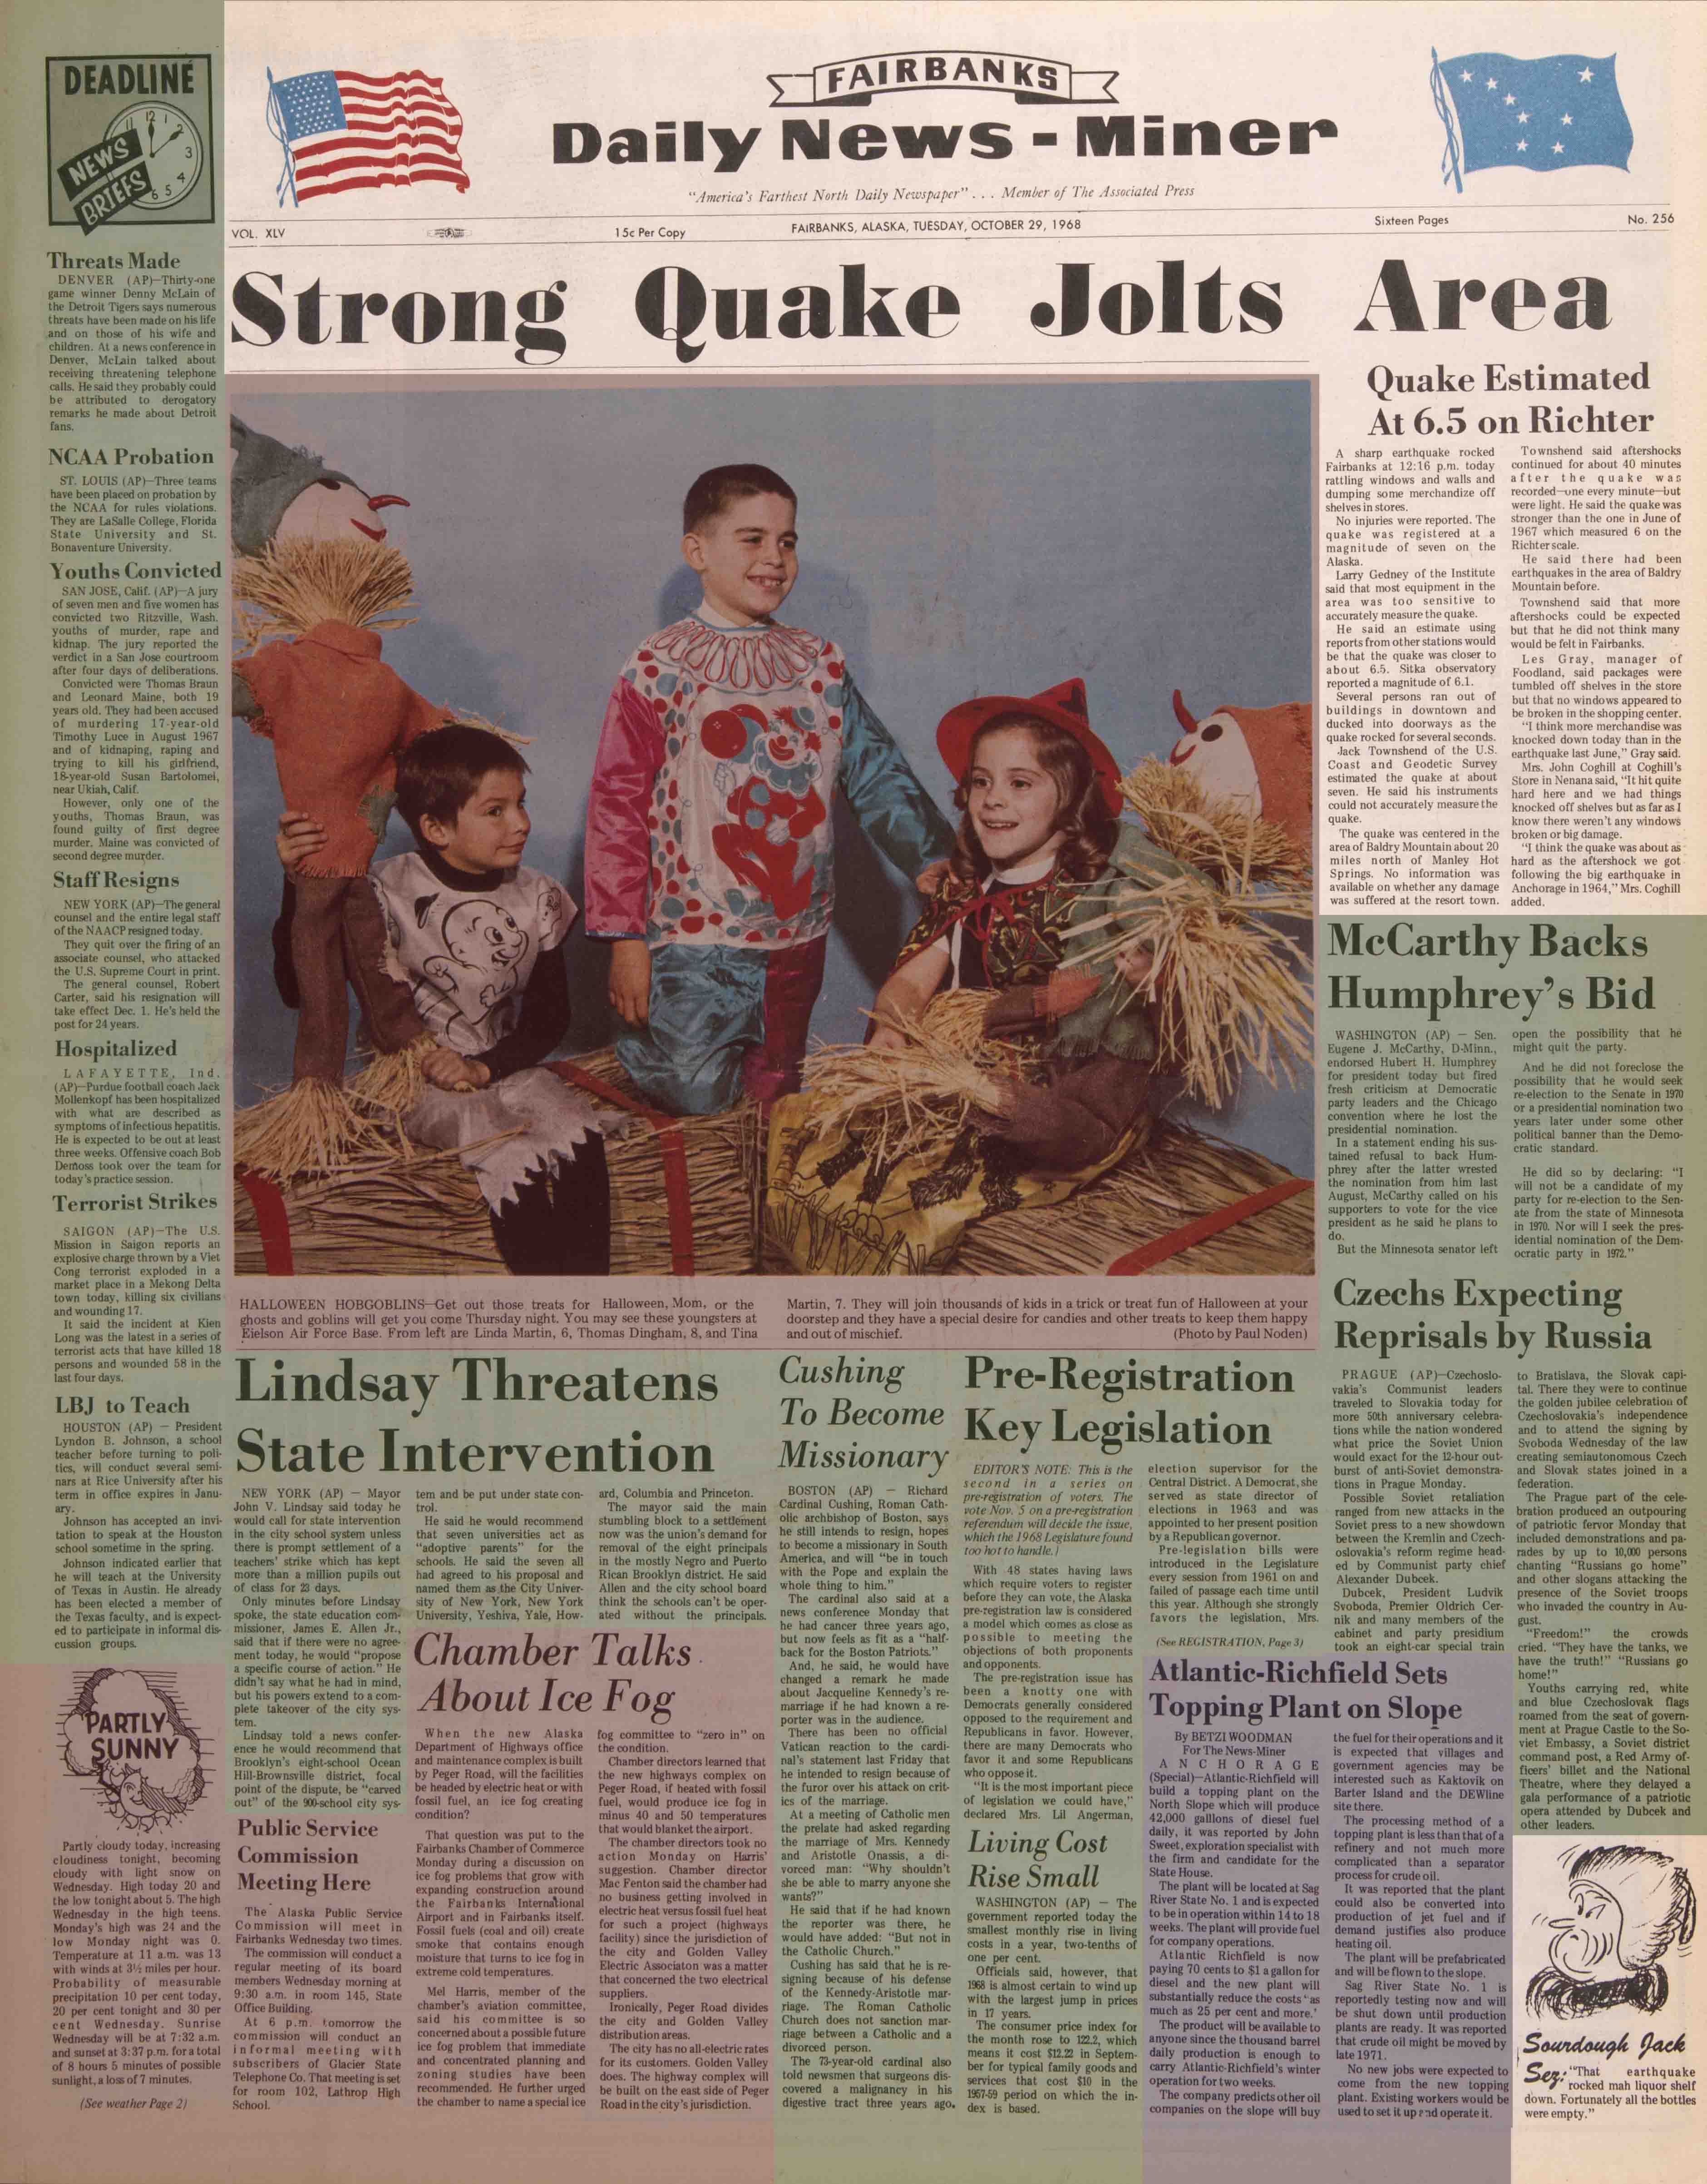 1968 October 29, Fairbanks Daily News-Miner (pg 1)